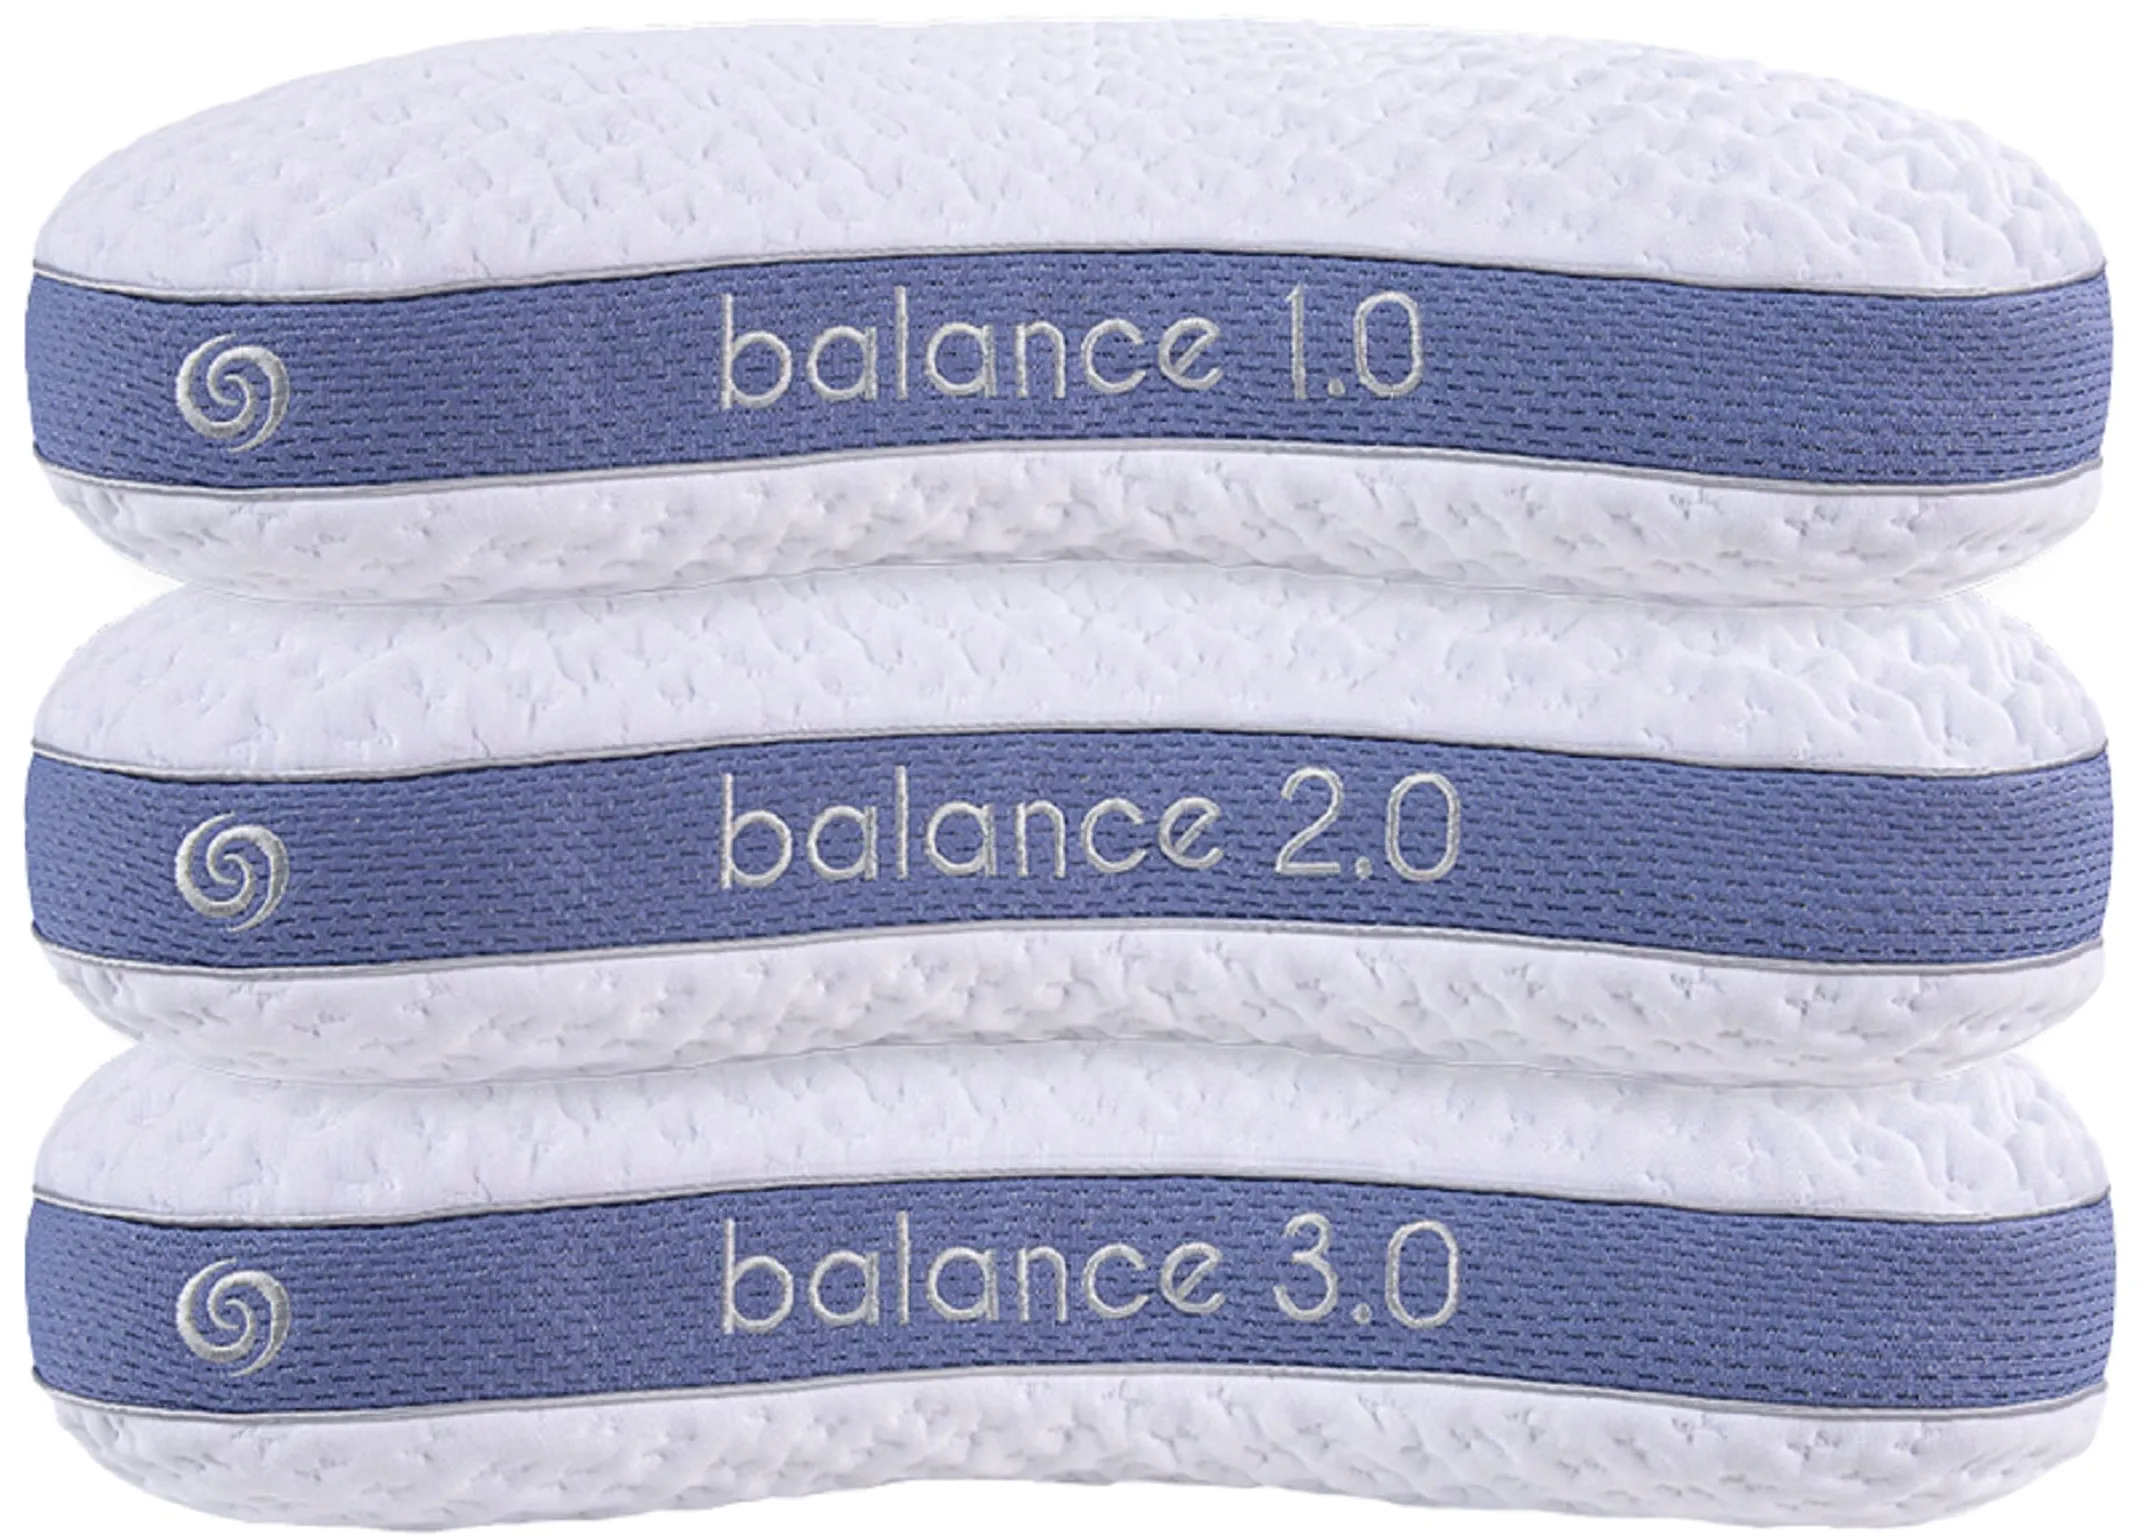 Bedgear Balance Cuddle 3.0 Personal Pillow